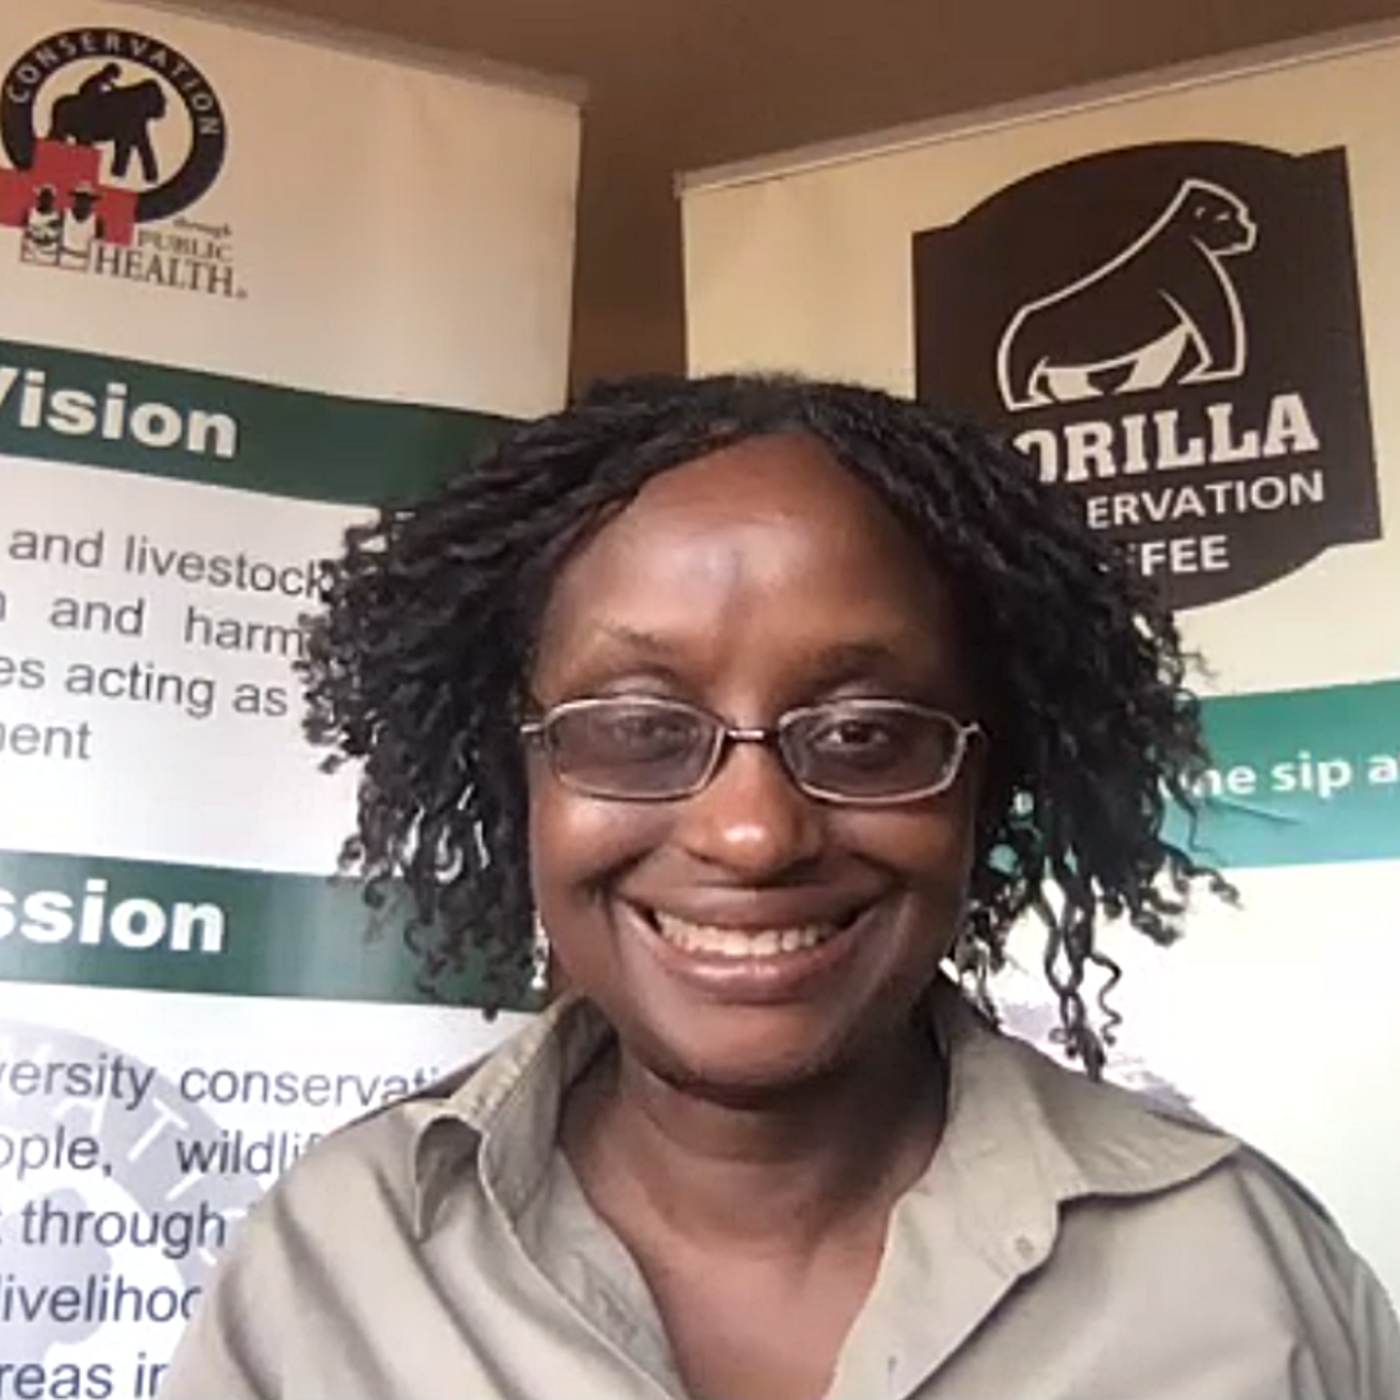 Episode 250: Happy World Gorilla Day! A Conversation with Dr. Gladys Kalema-Zikusoka on COVID-19’s Impact on Gorilla Conservation and Public Health in Uganda